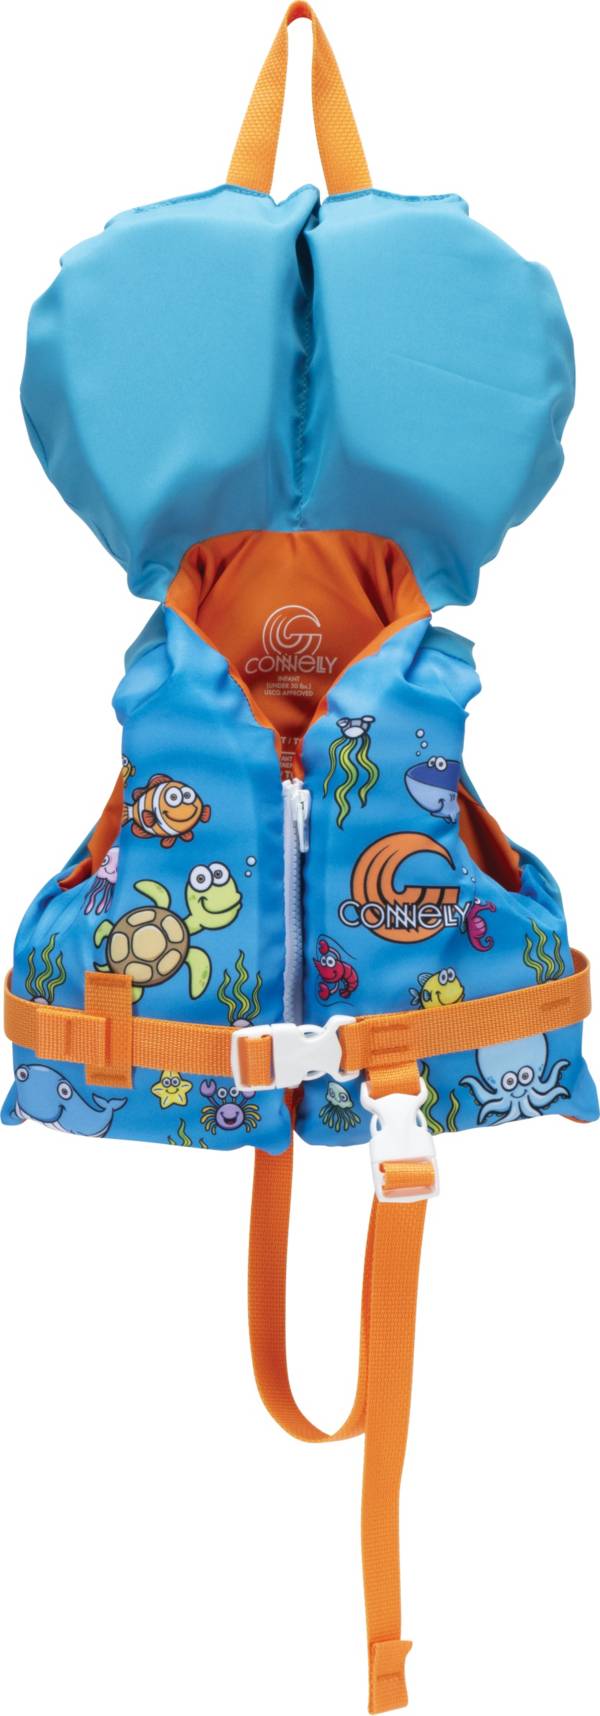 Connelly Boys' Infant Premium Nylon Life Vest product image